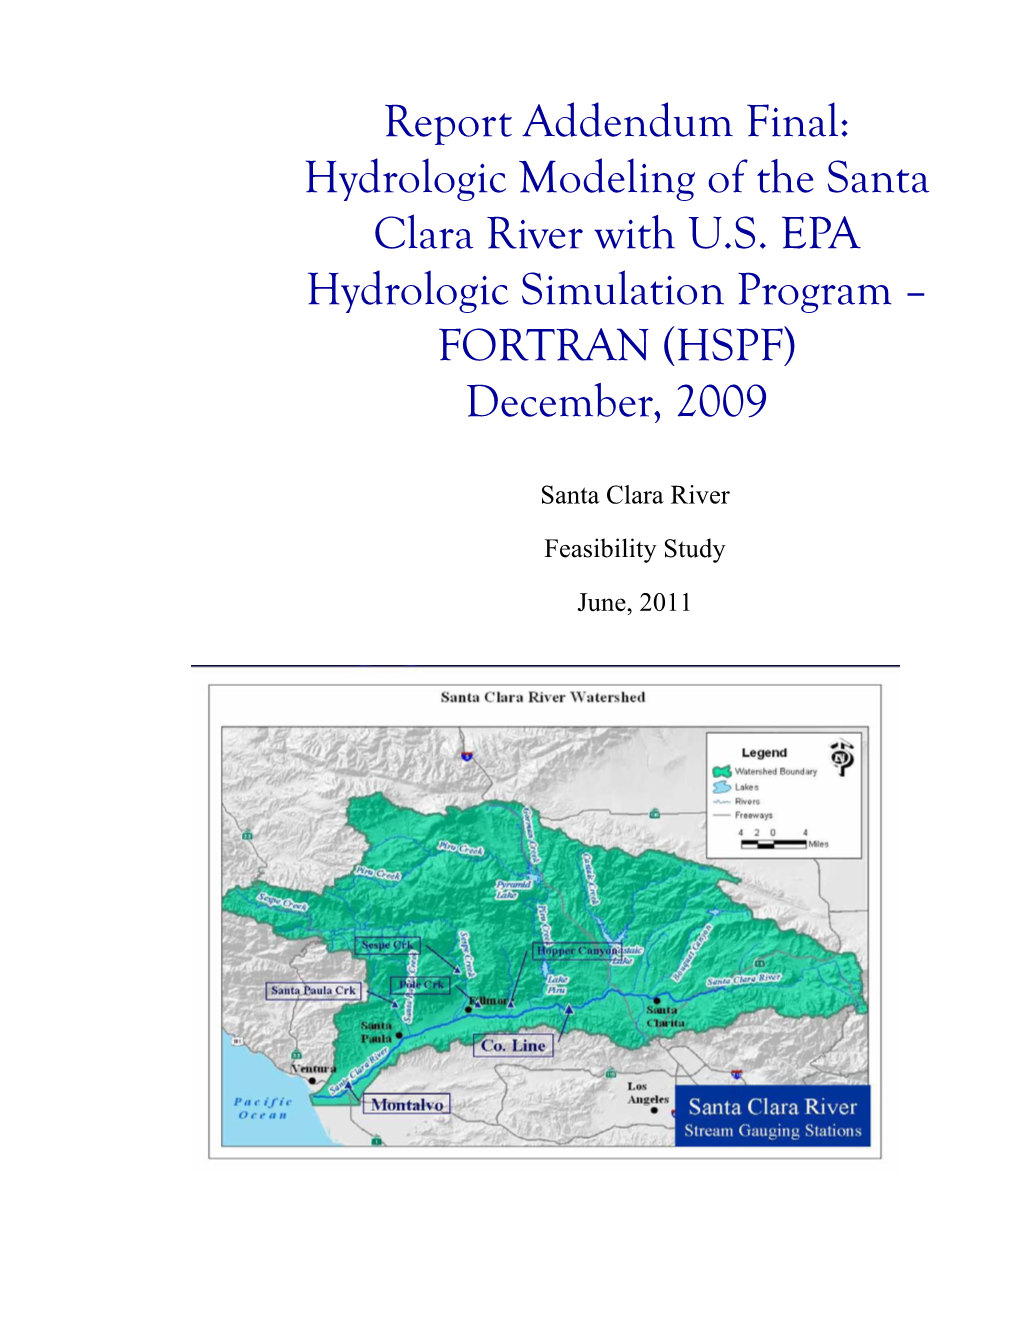 Report Addendum Final: Hydrologic Modeling of the Santa Clara River